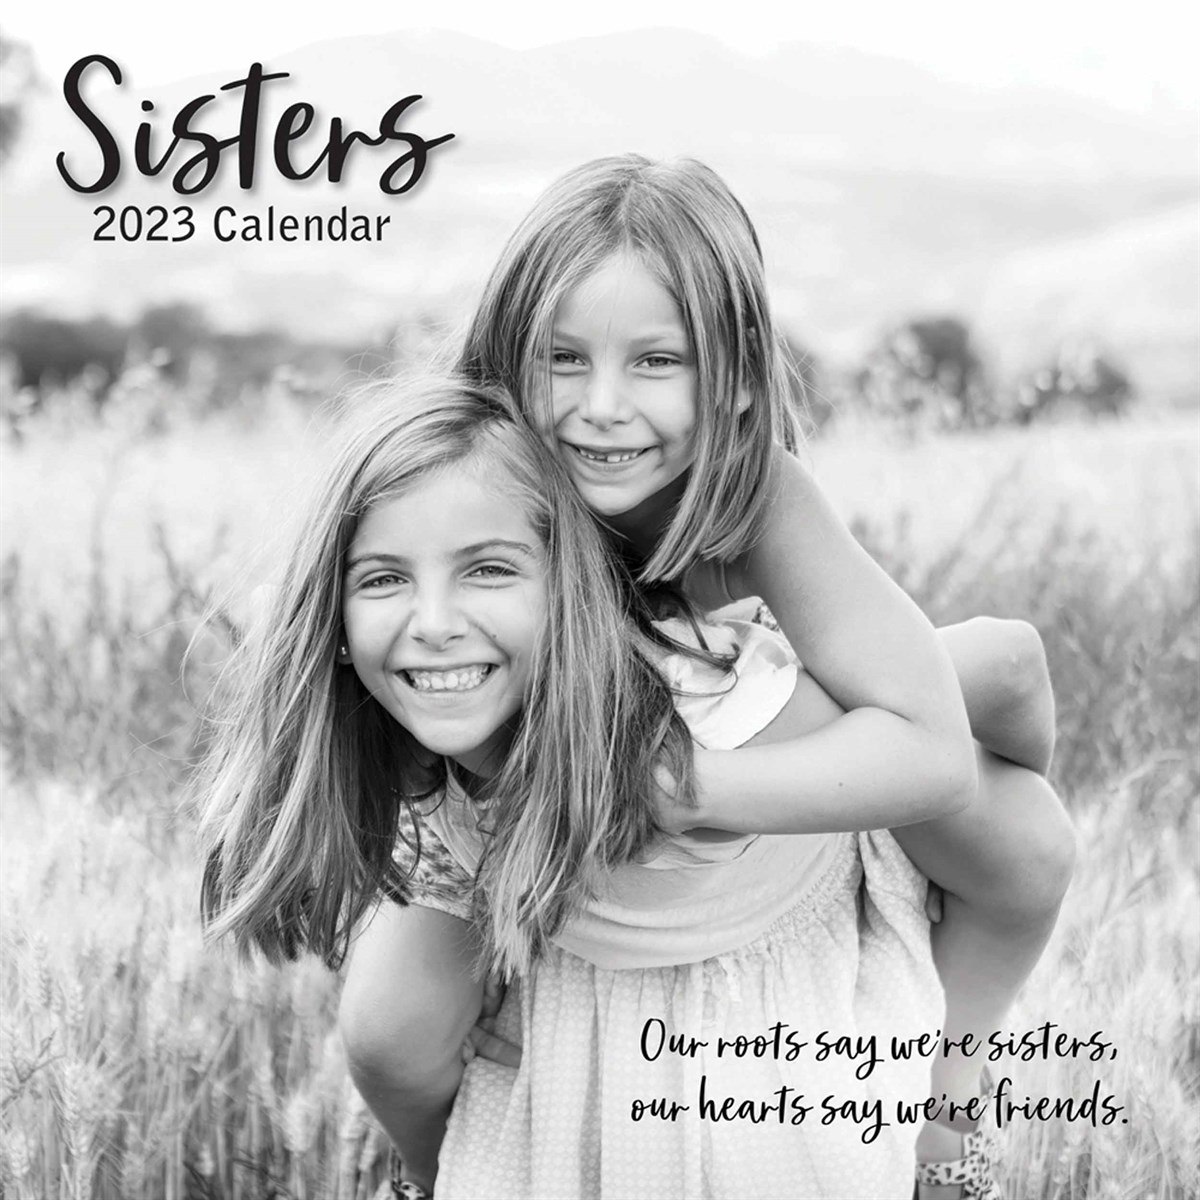 Sisters 2023 Calendars